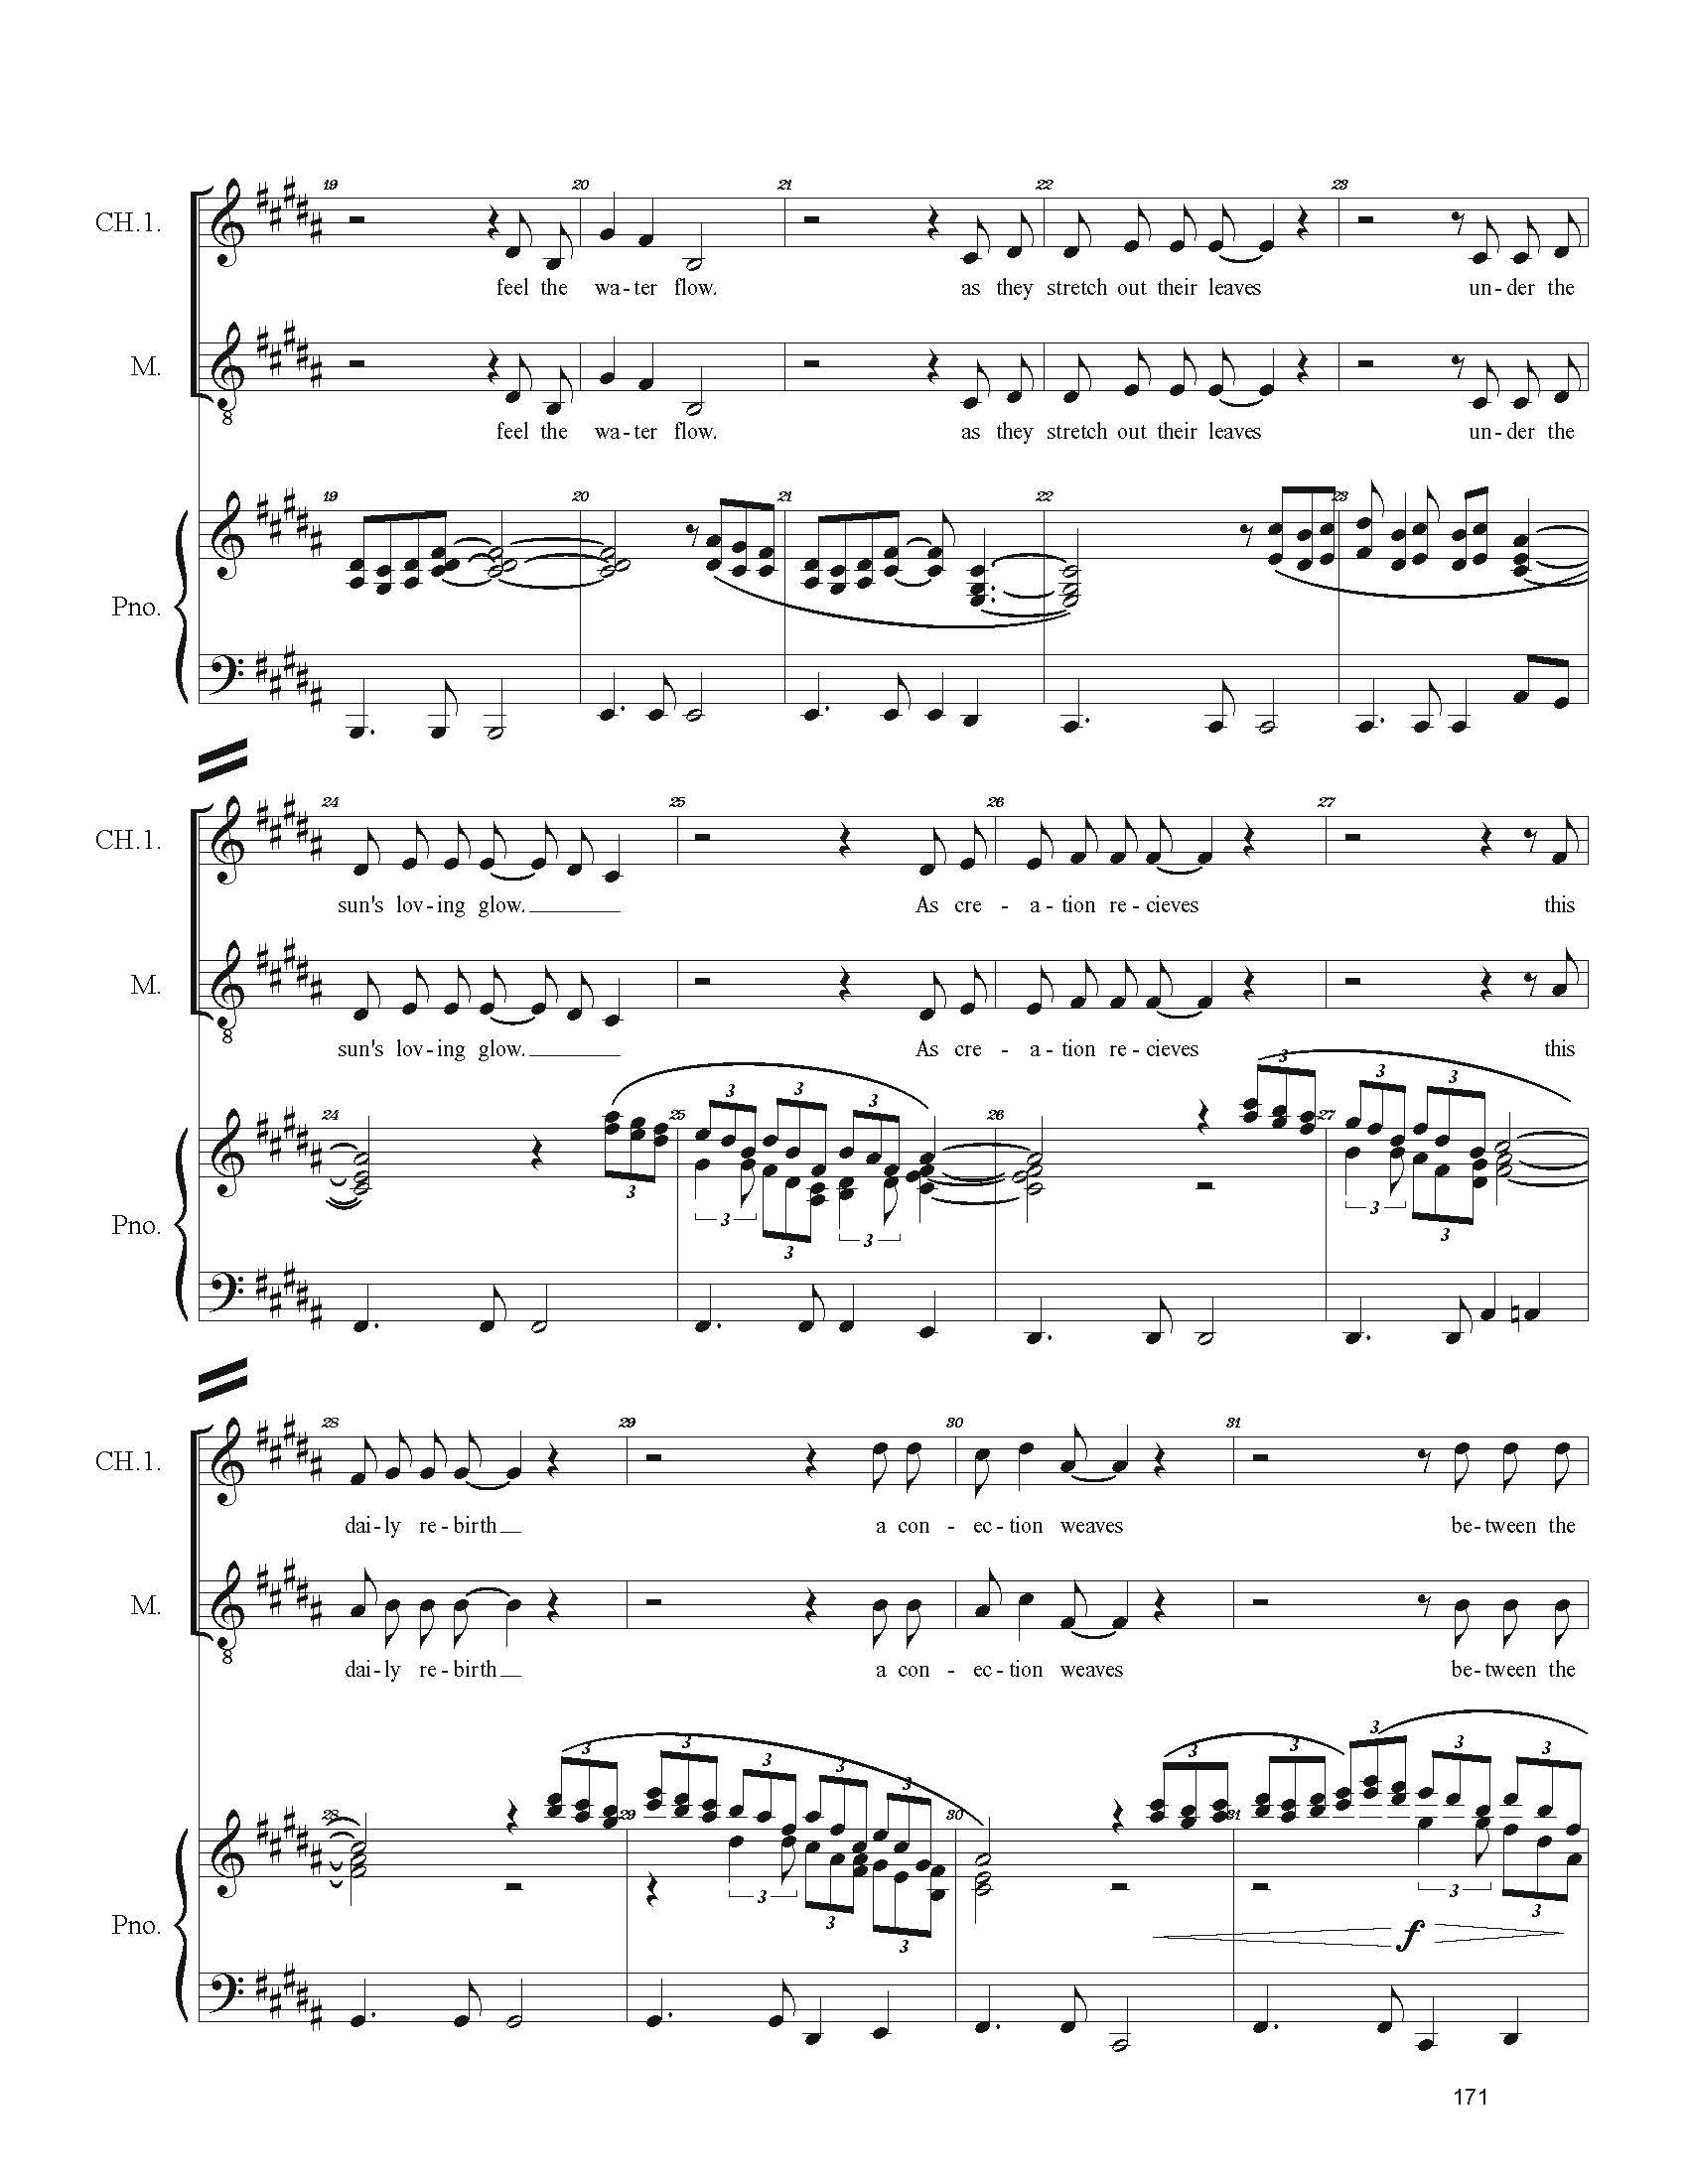 FULL PIANO VOCAL SCORE DRAFT 1 - Score_Page_171.jpg